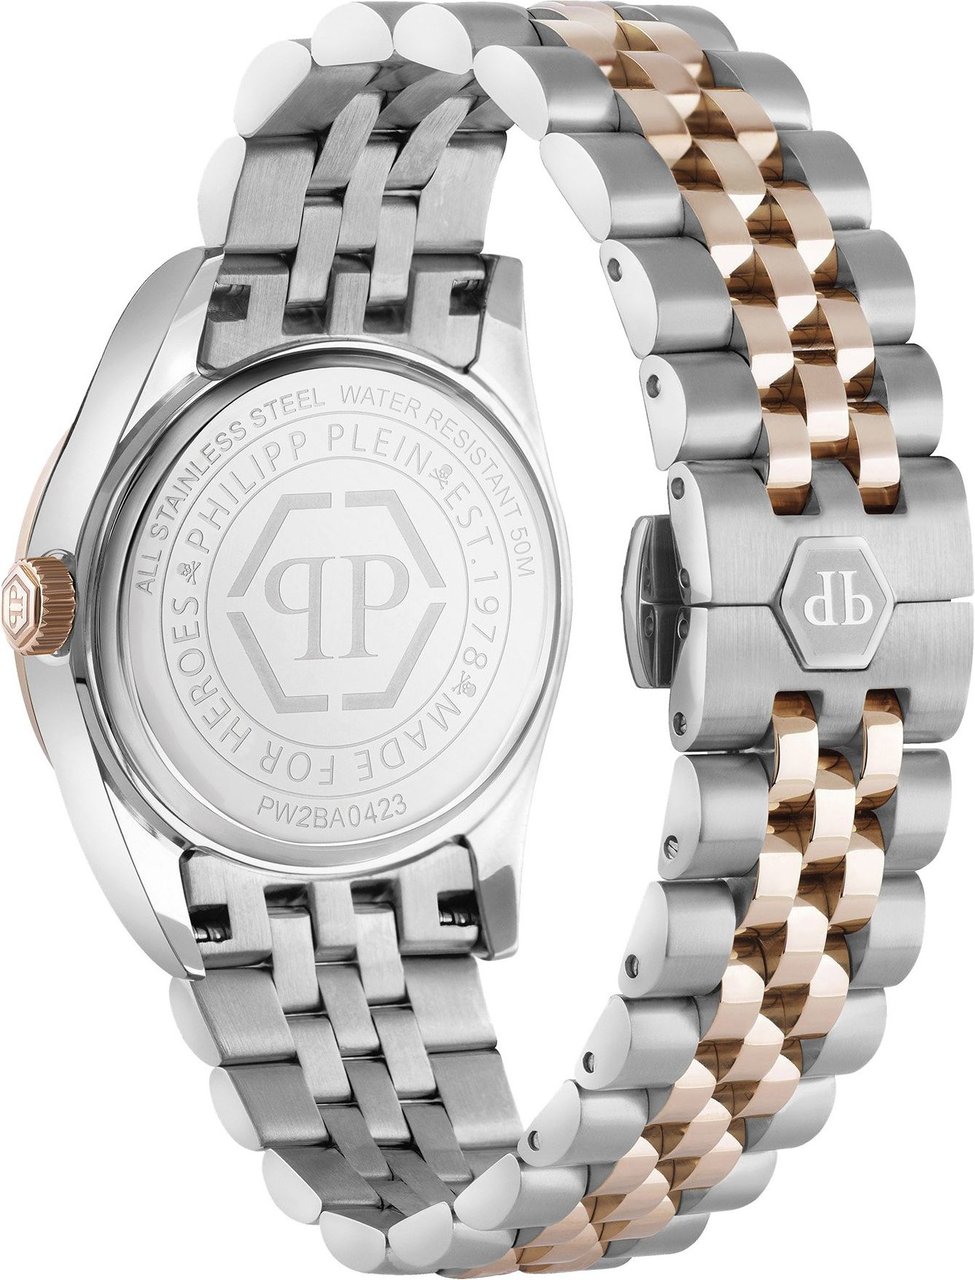 Philipp Plein PW2BA0423 Date Superlative horloge Goud